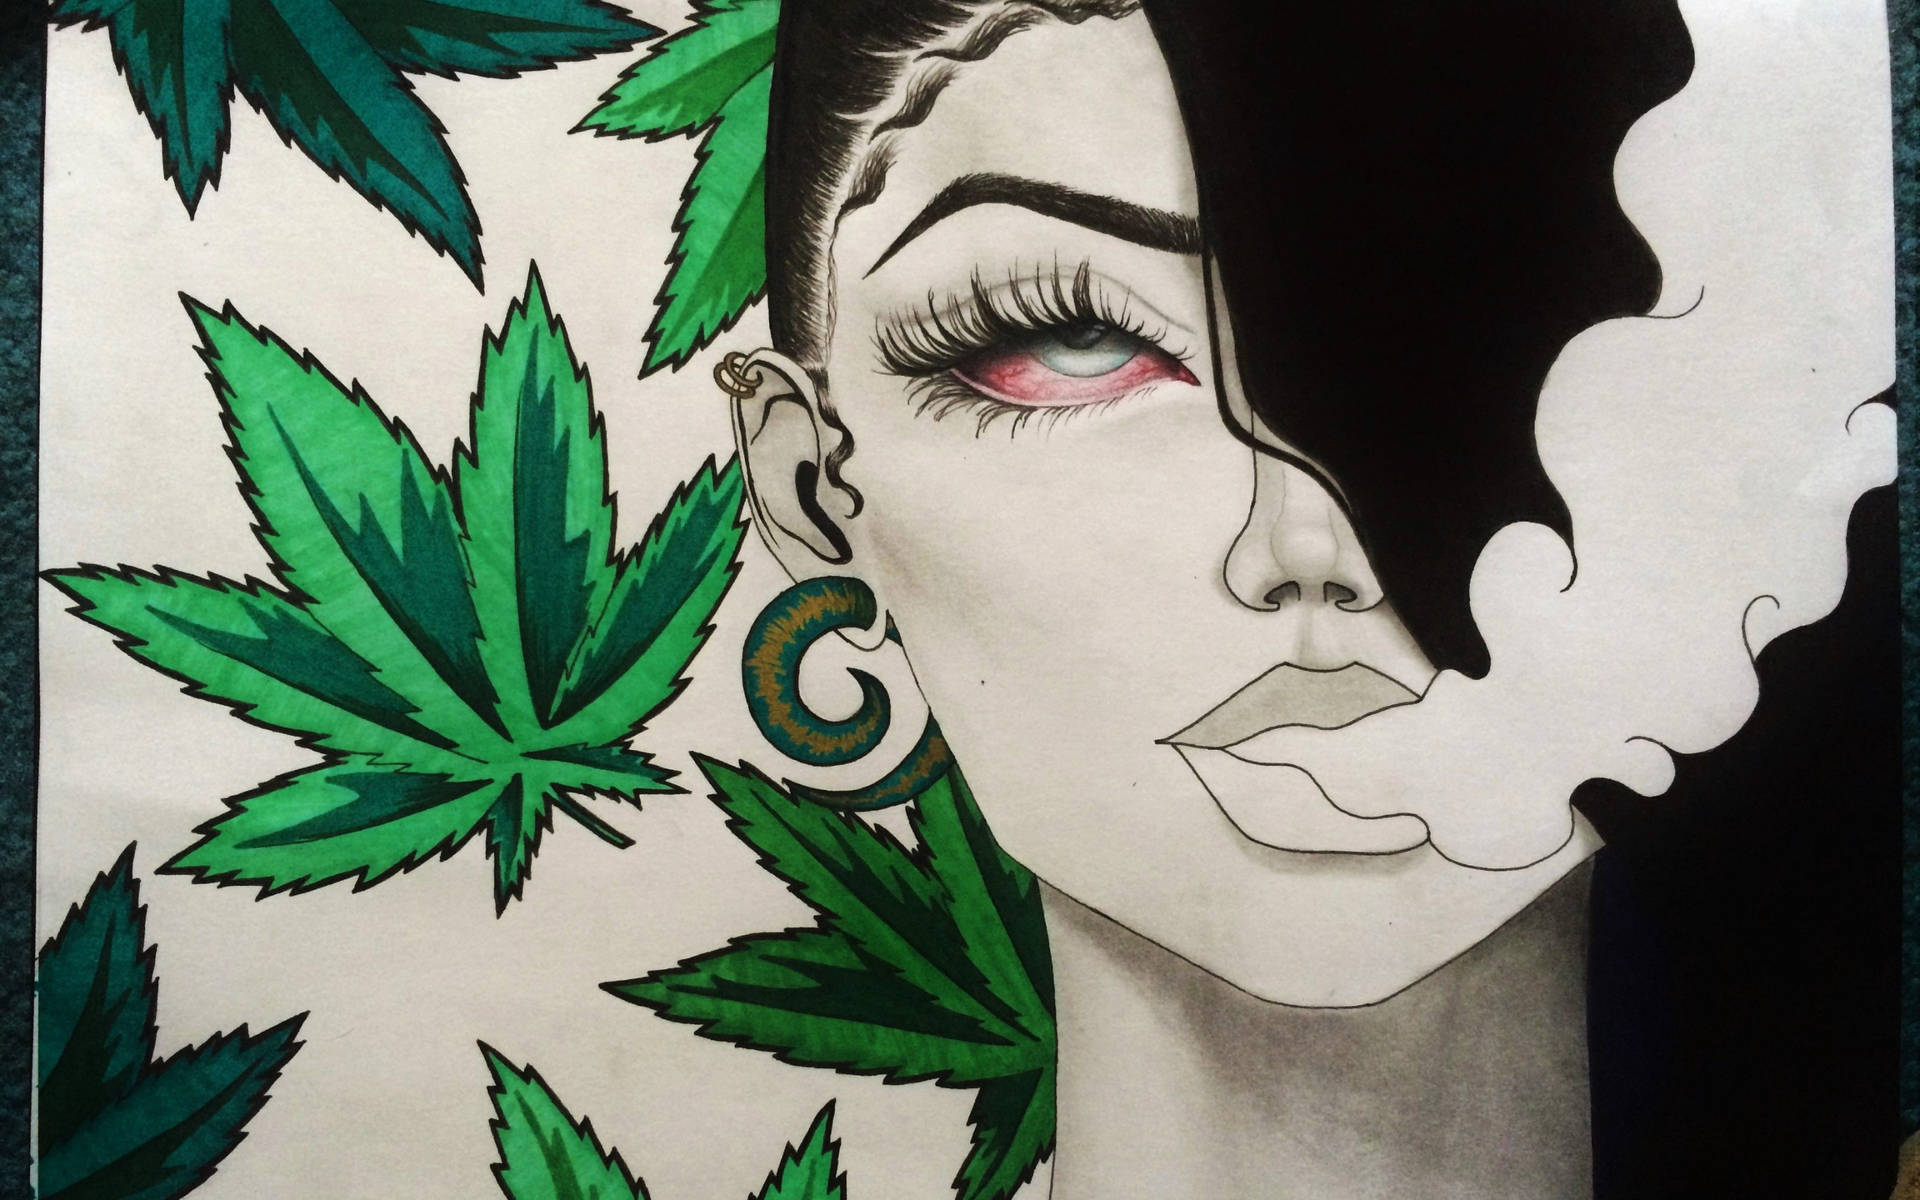 Smoking Weed Digital Art Wallpaper